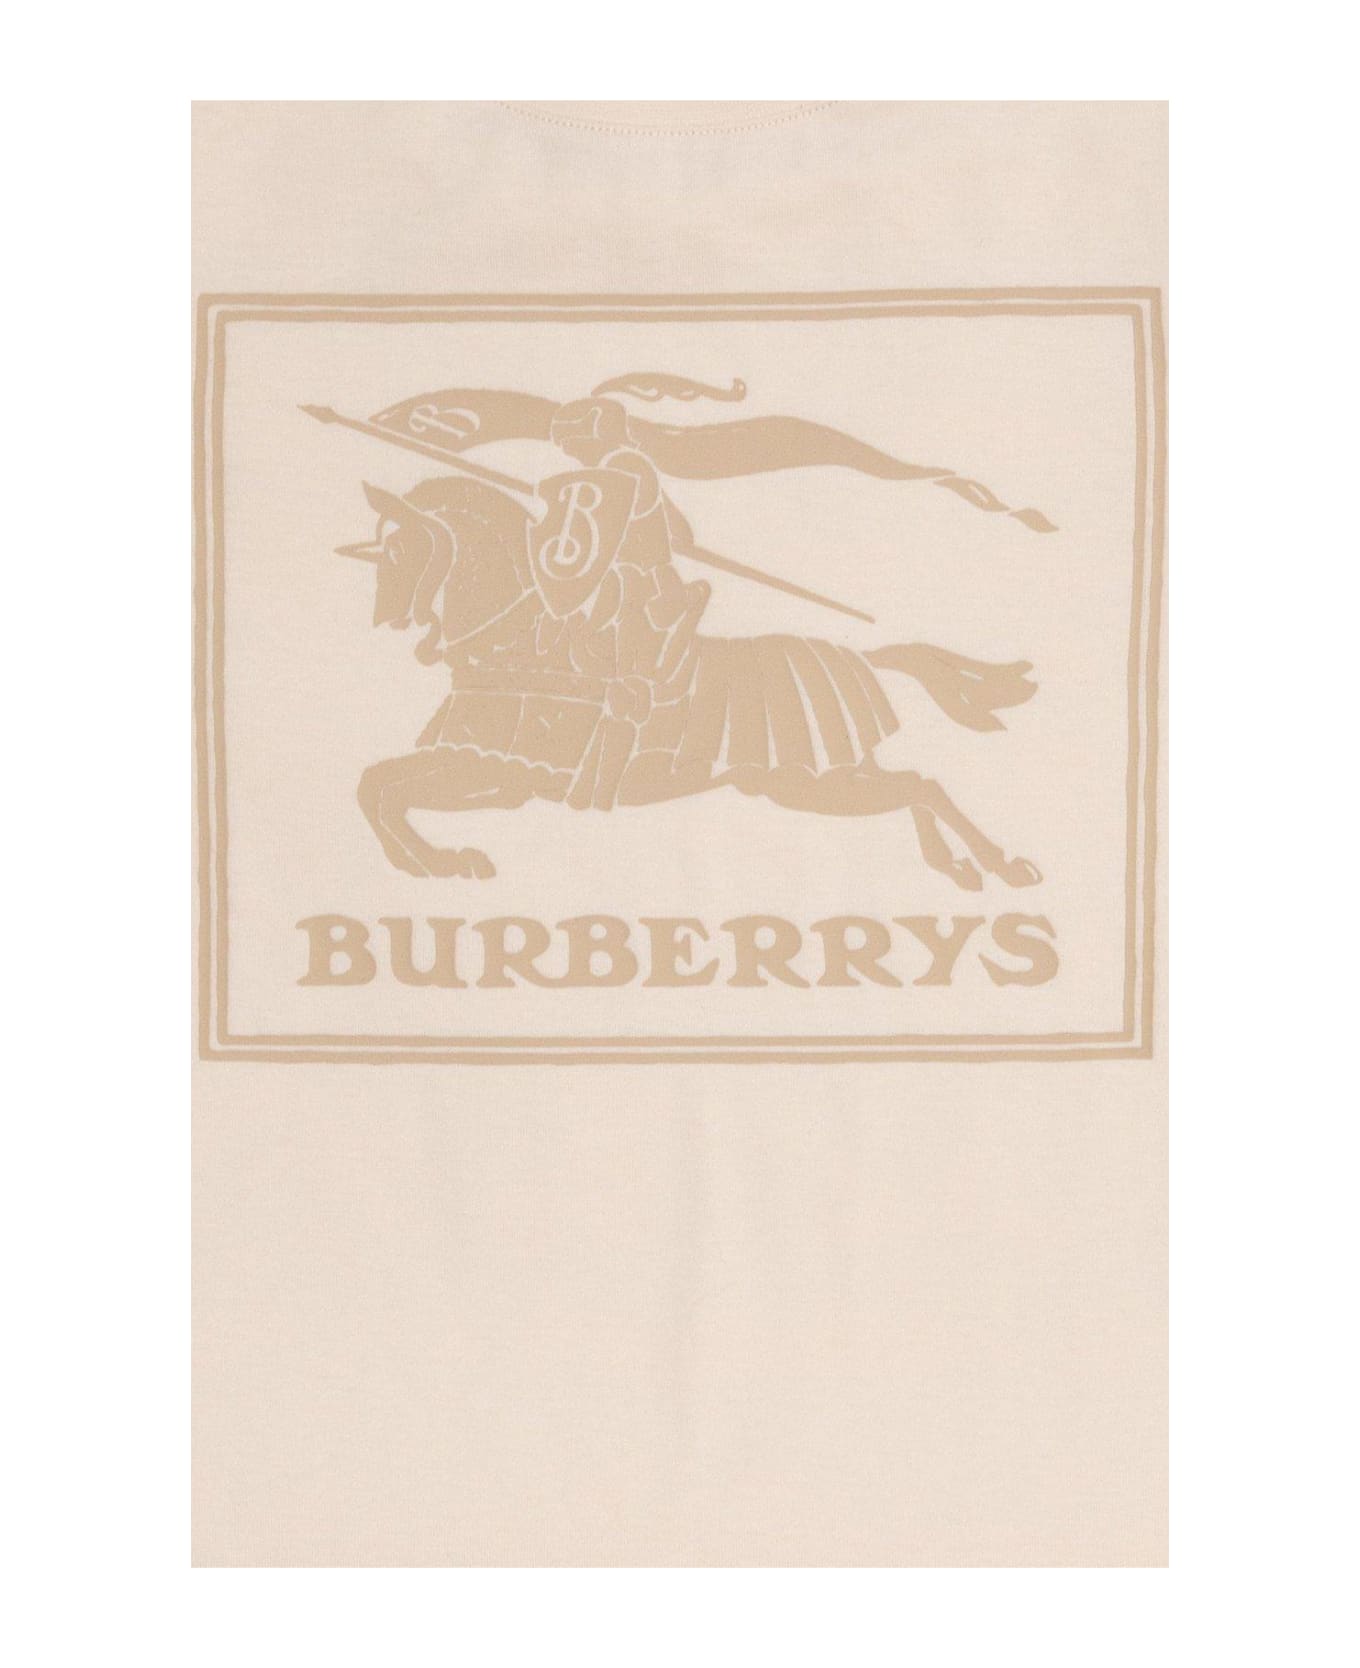 Burberry Equestrian Knight Motif Crewneck T-shirt - Pale Cream